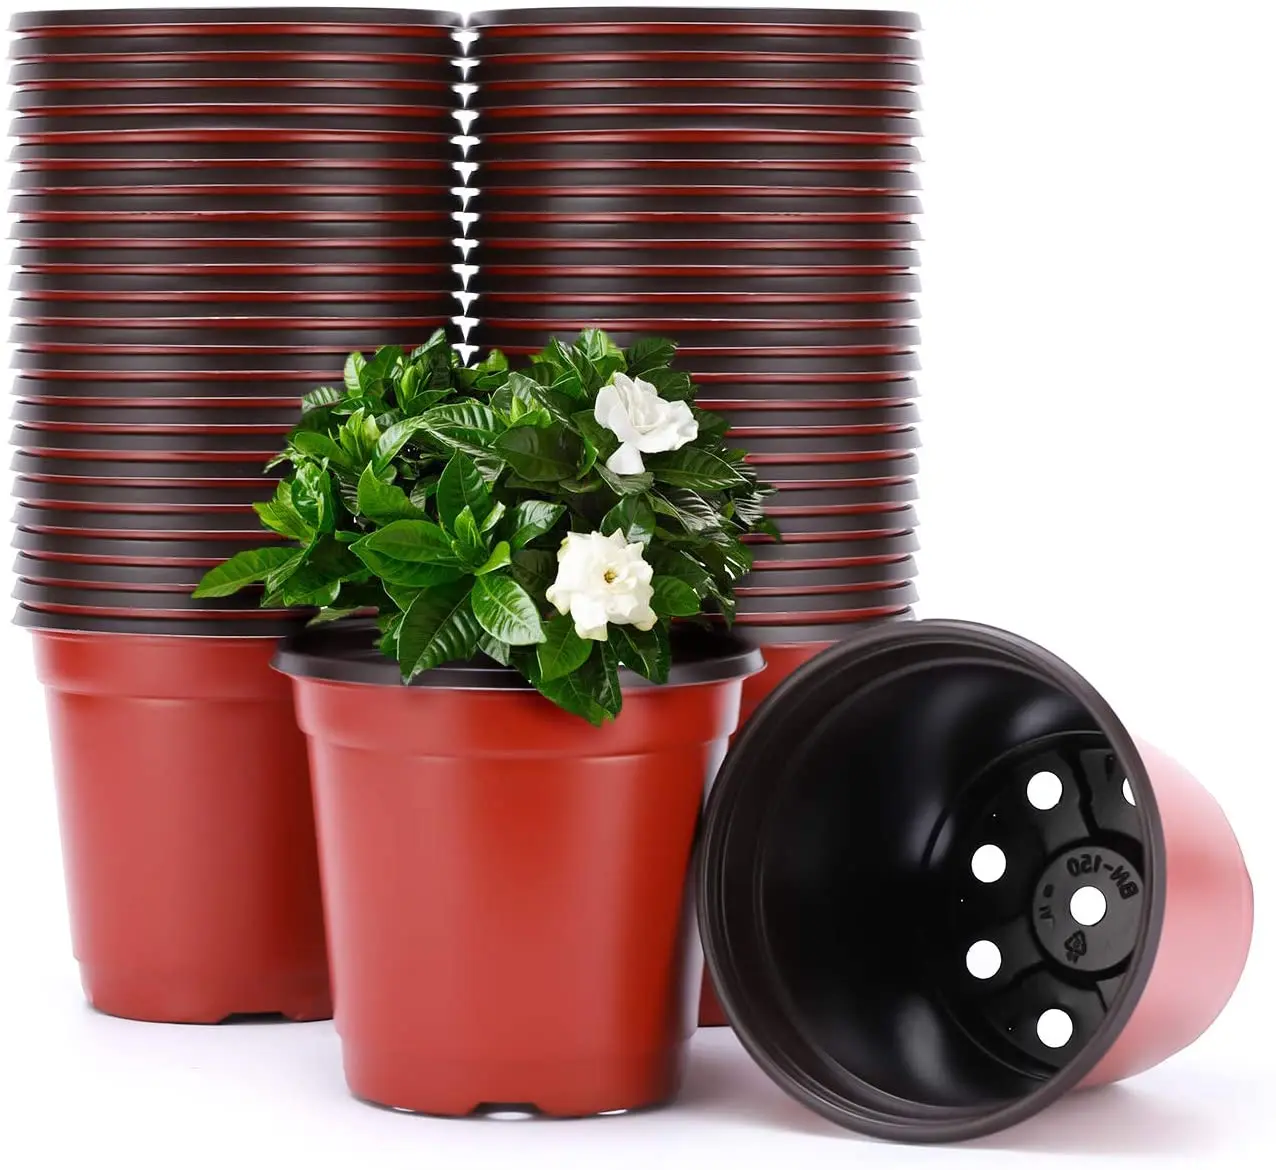 

H477 Wholesales Multiple Sizes Plant Nursery Pots Home Garden Transplant Plastic Flower Pot, Red and black